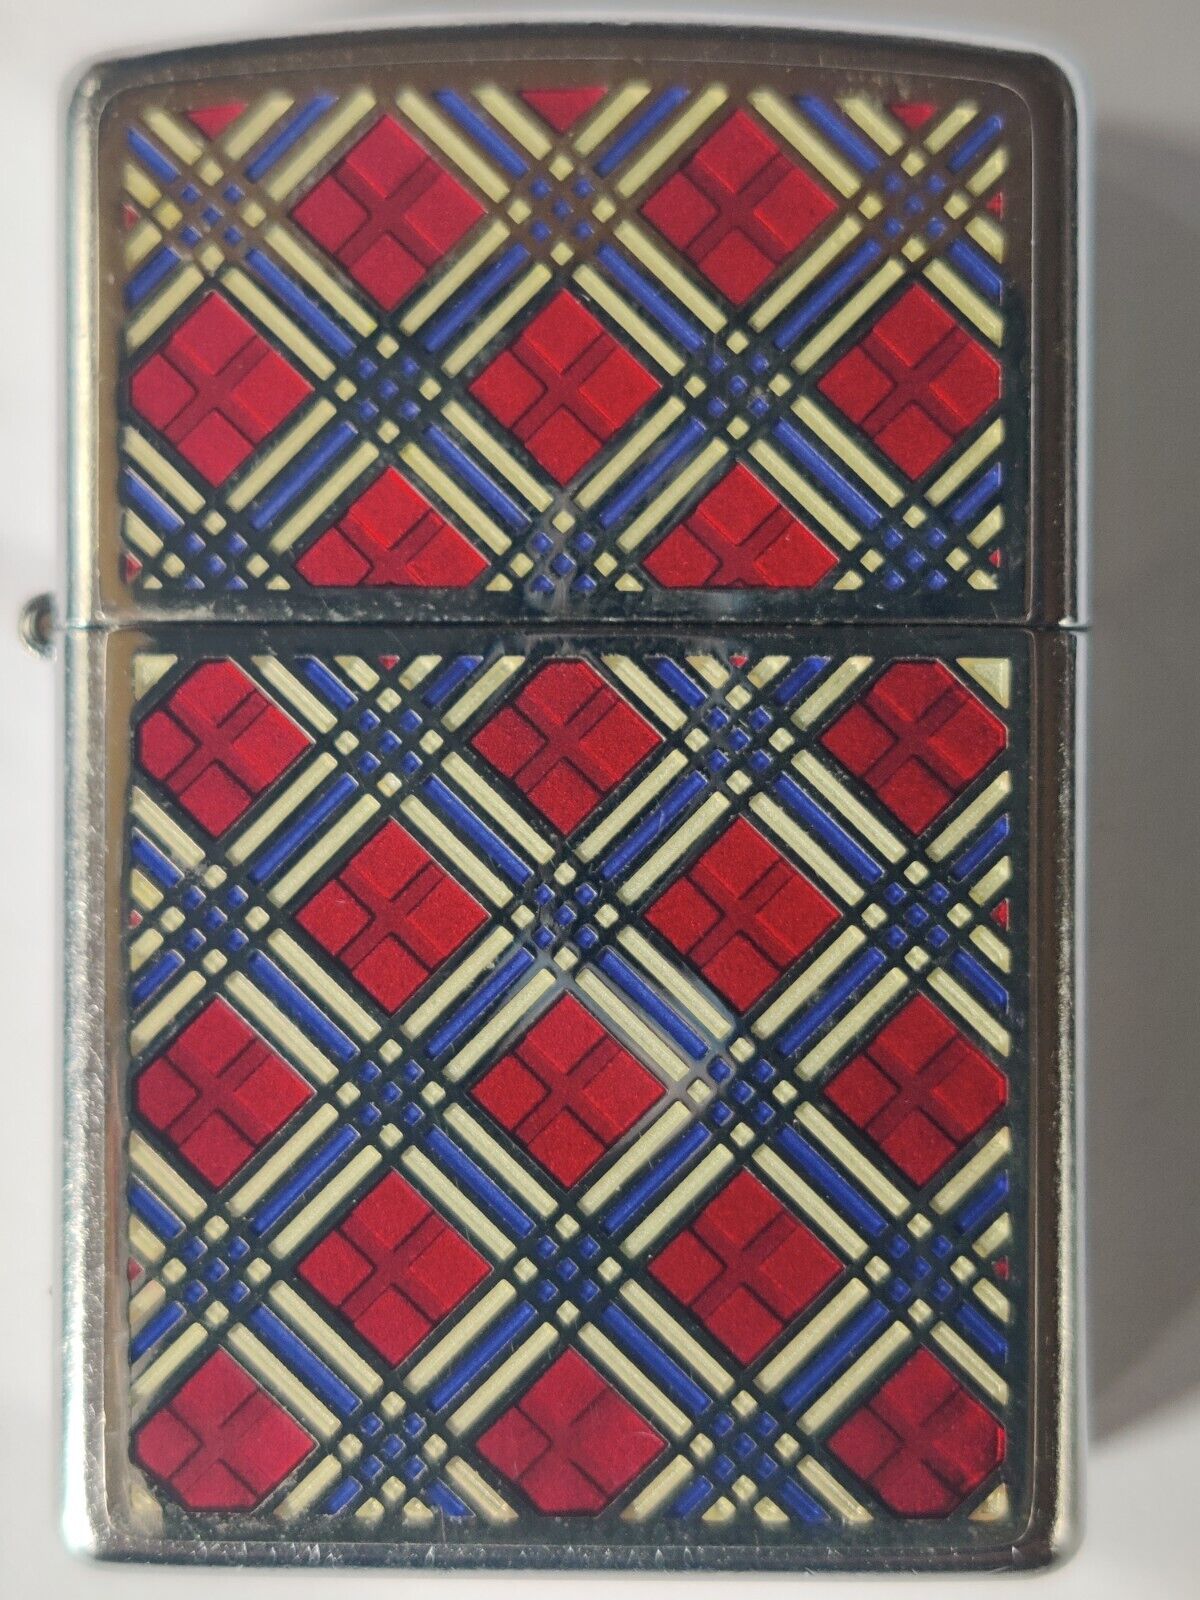 Zippo lighter CHERRY PLAIDNESS 2005 new in original labeled box mint